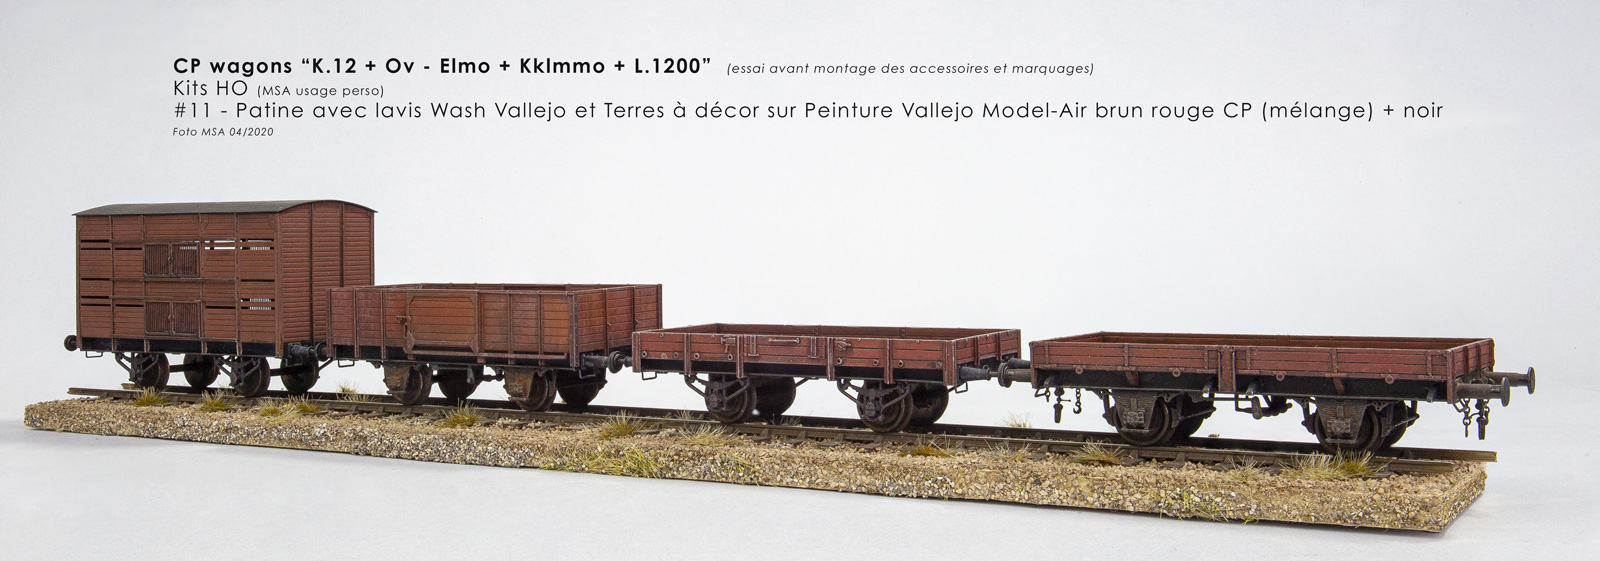 CP wagons “K.12 + Ov - Elmo + Kklmmo + L.1200”